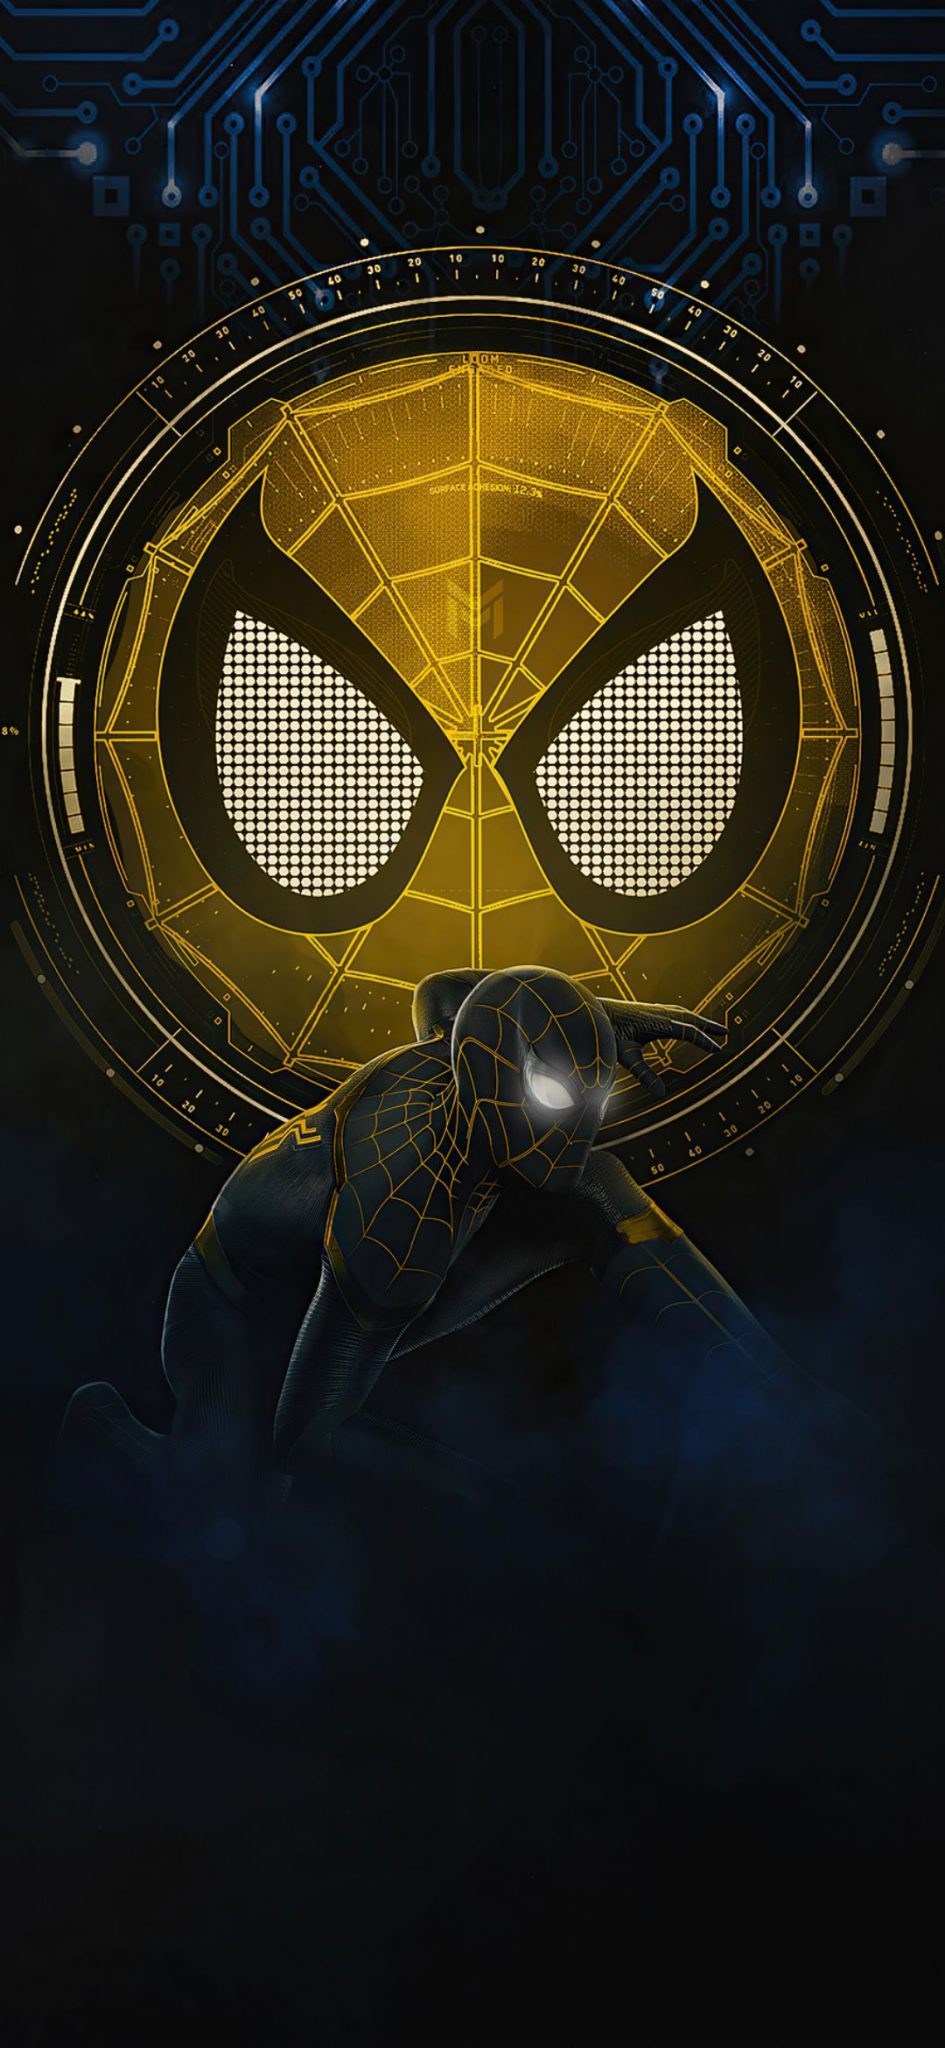 Spider Man No Way Home 4k Wallpapers - Top 35 Best No Way Home